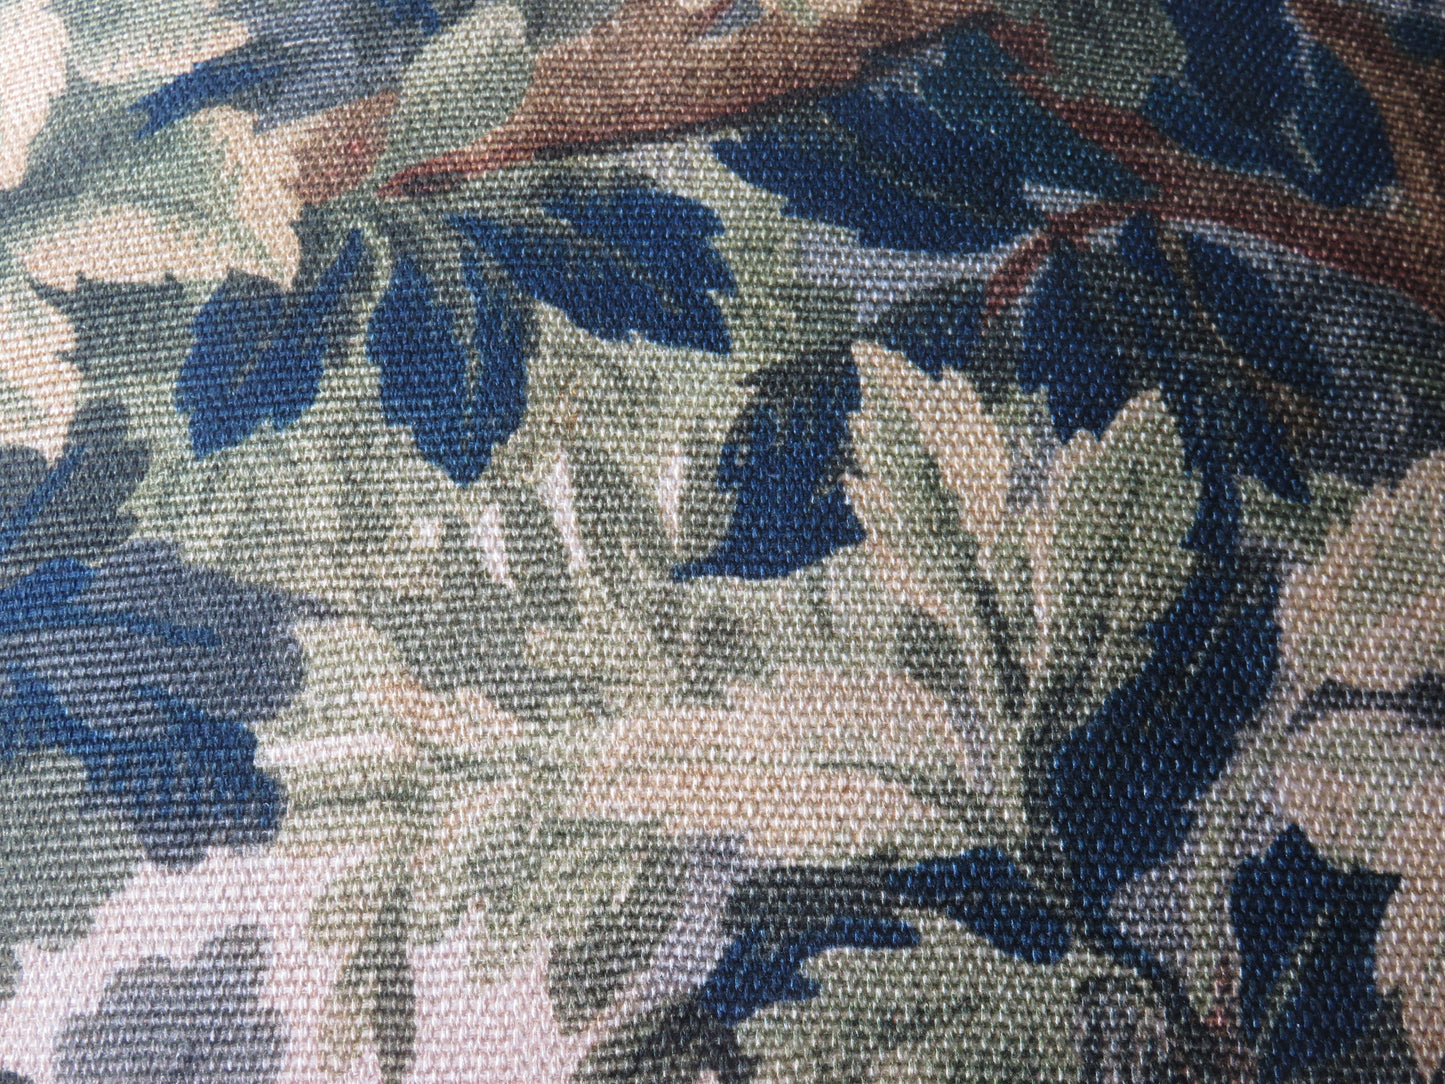 green oak eaves pillow cover made from high end Bois de chene fabric in Verdure